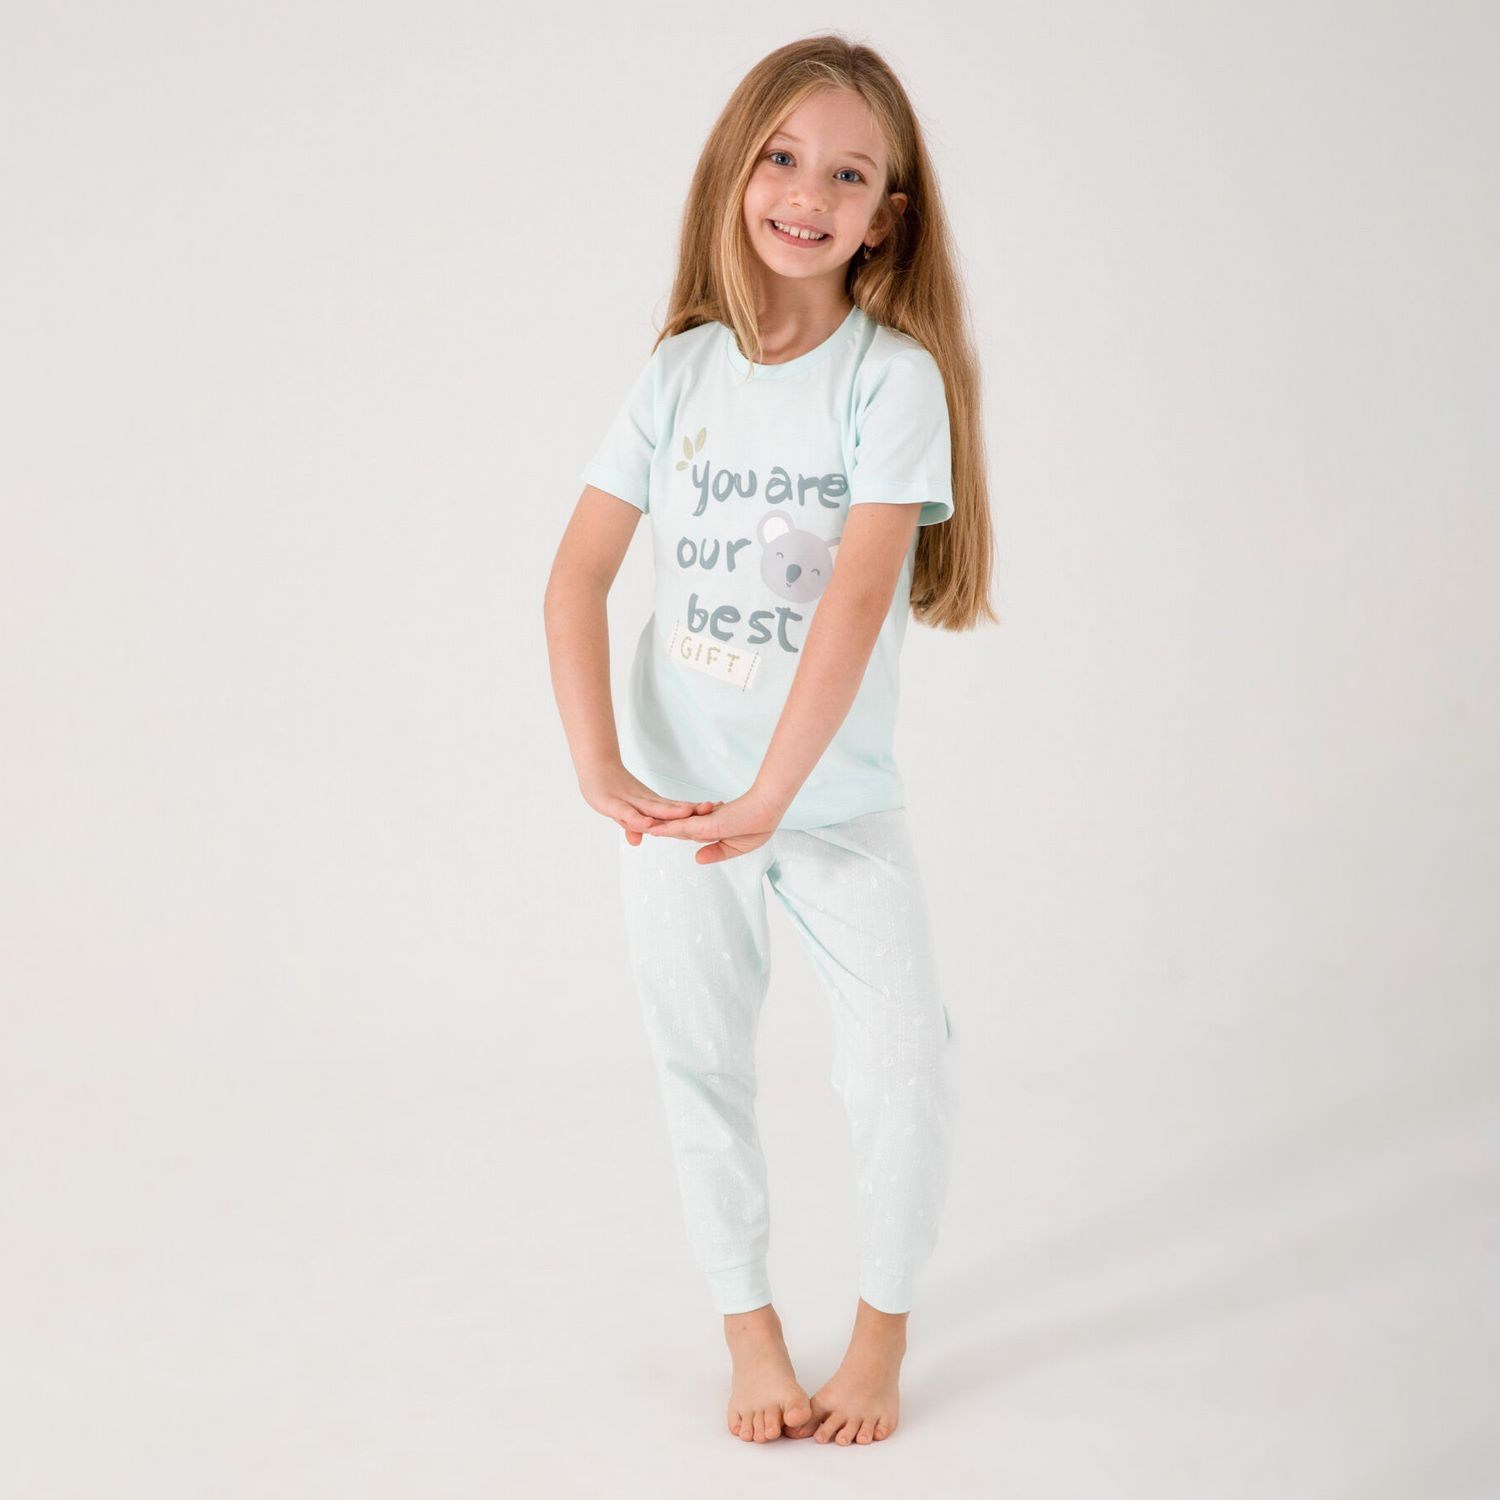 Roly Poly Kız Çocuk Pijama Takımı RP3089 Nil